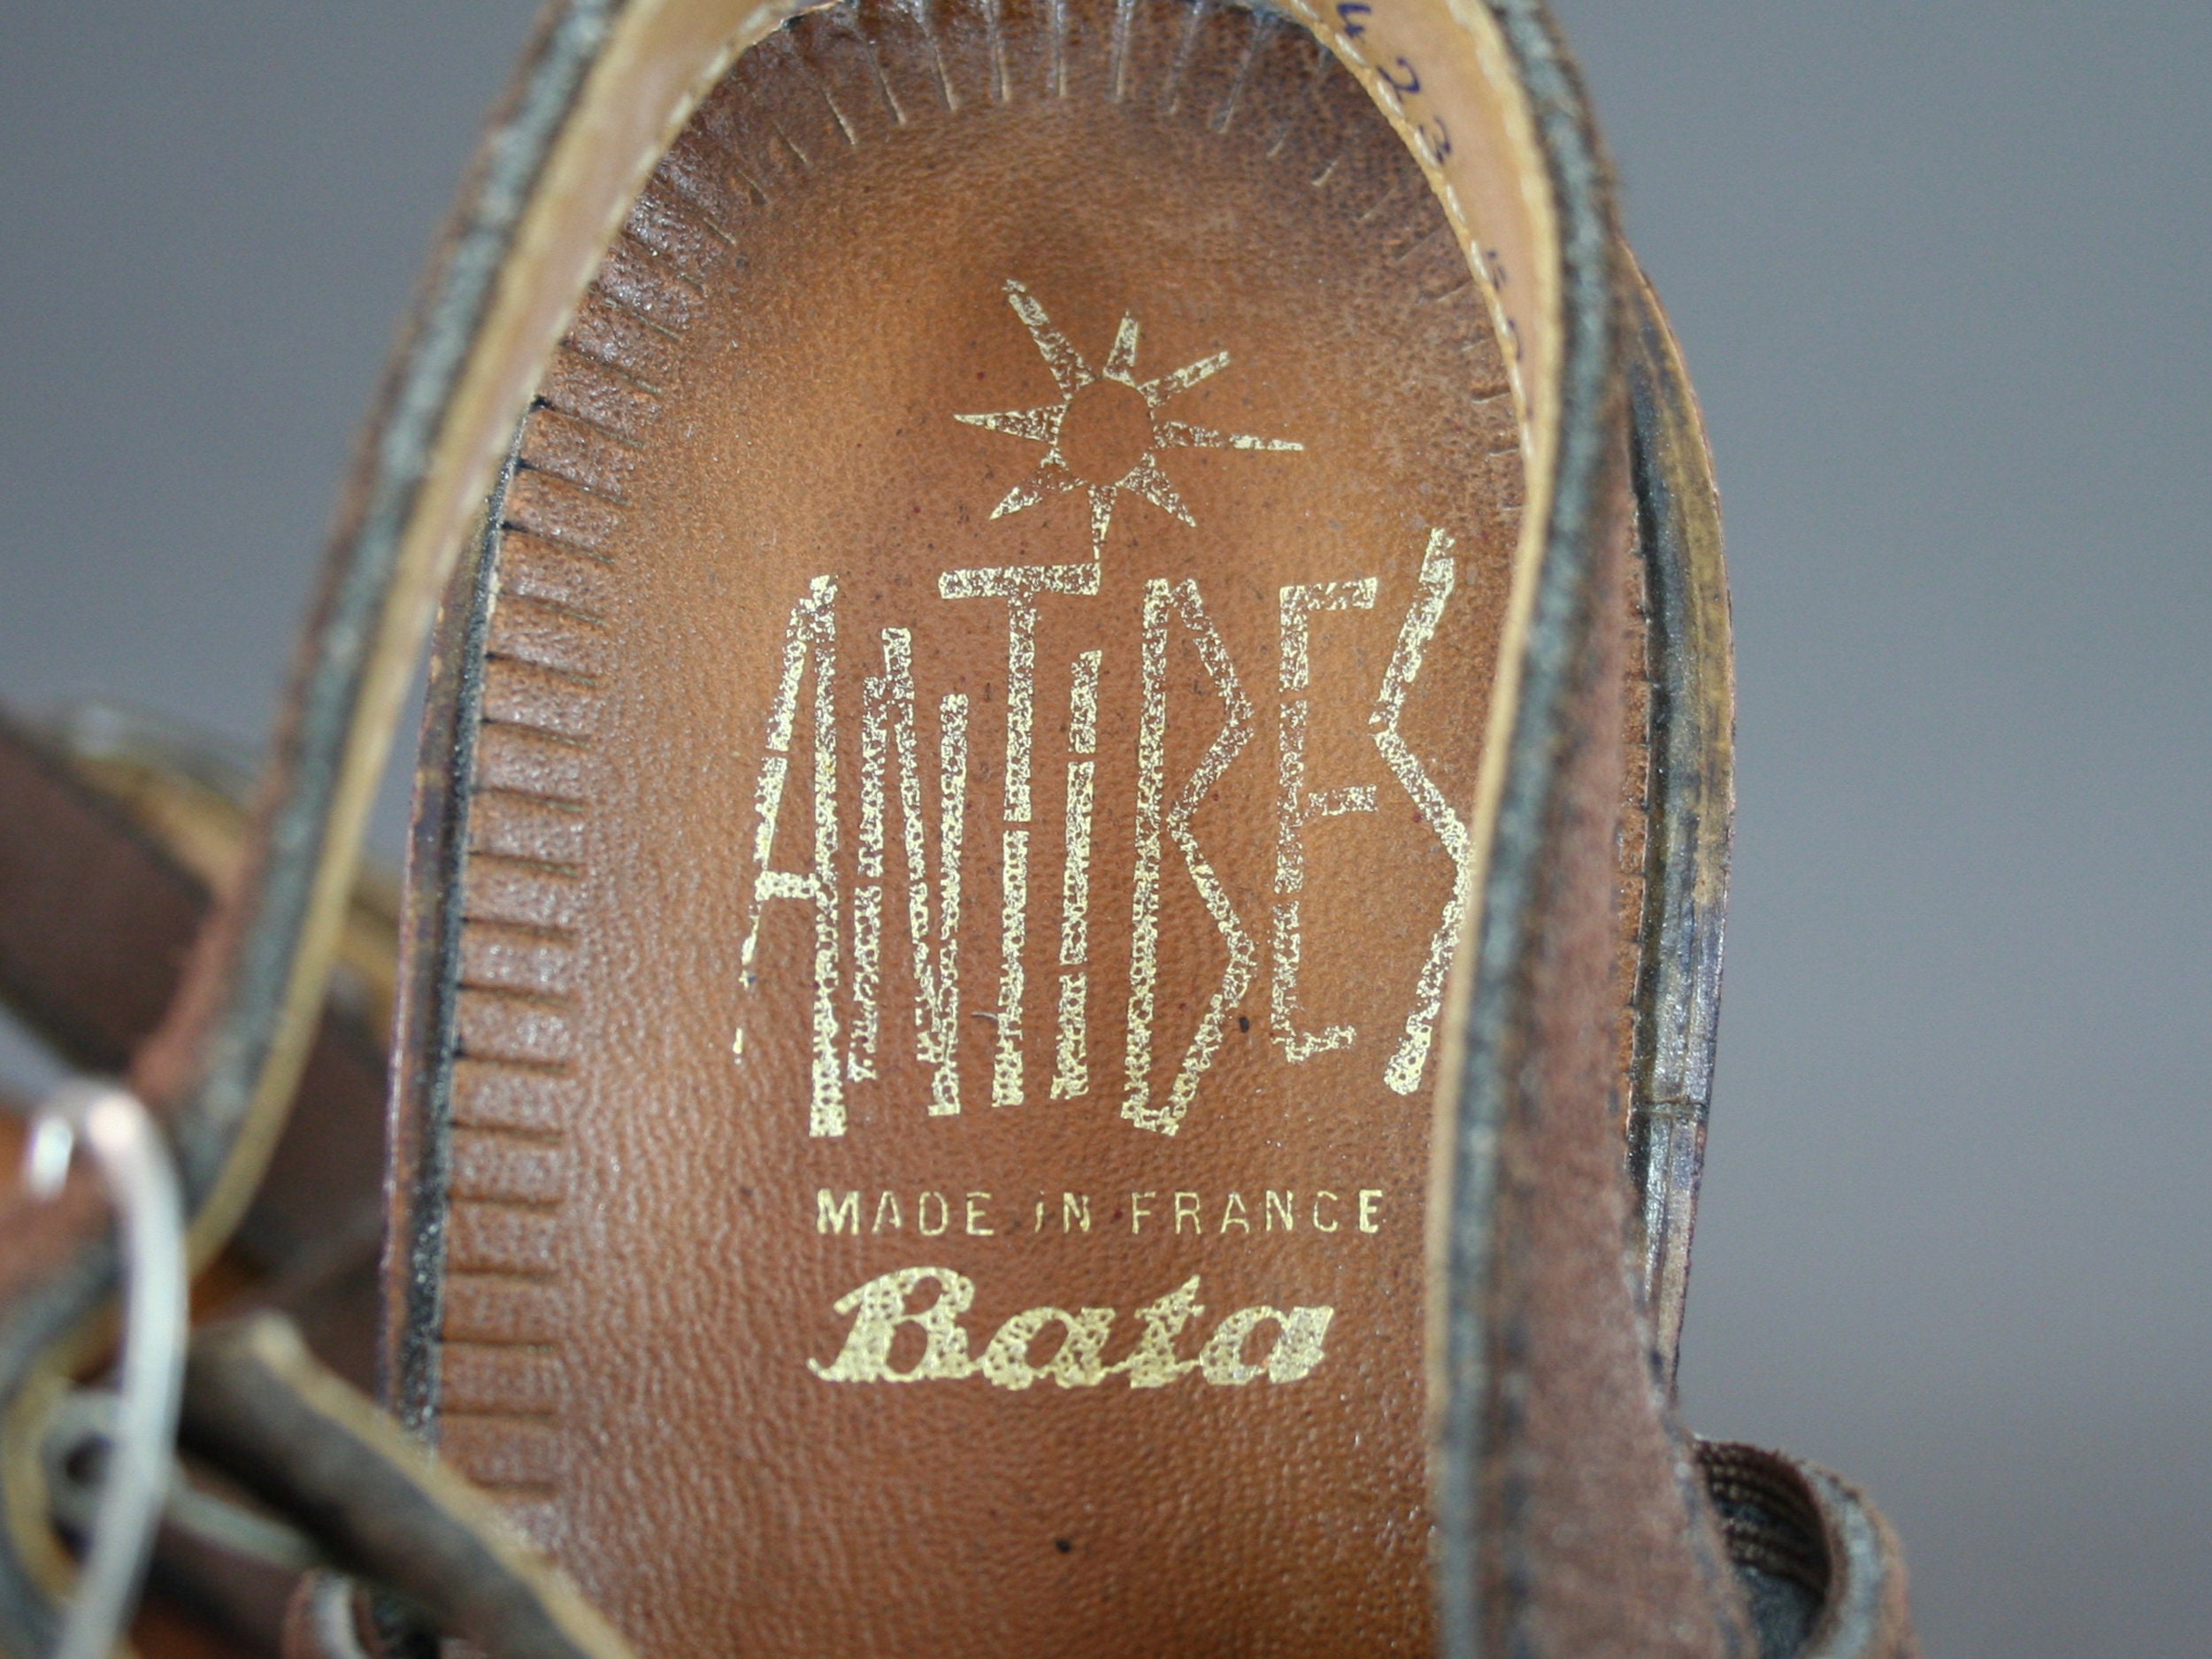 France 39 UK 7.5 Vintage 1970s BATA wedge sandals Size US 5.5 Suede platform shoes Shoes Womens Shoes Sandals Espadrilles & Wedges 